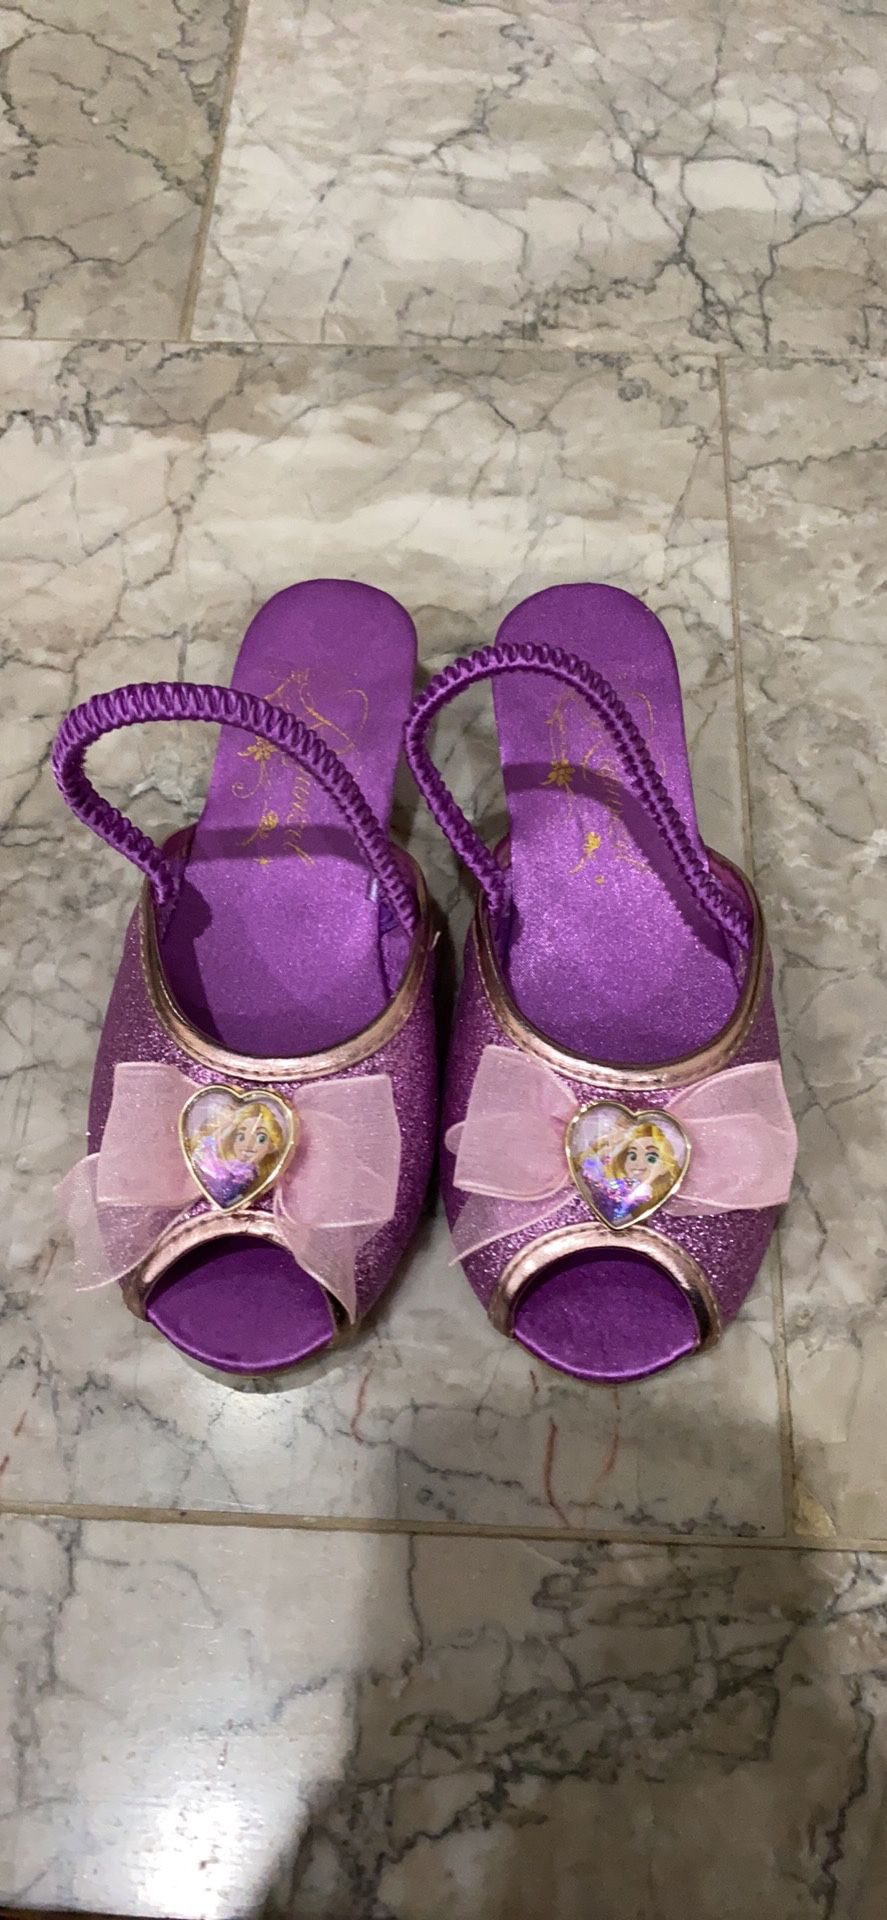 Disney princess rapunzel toddler shoes